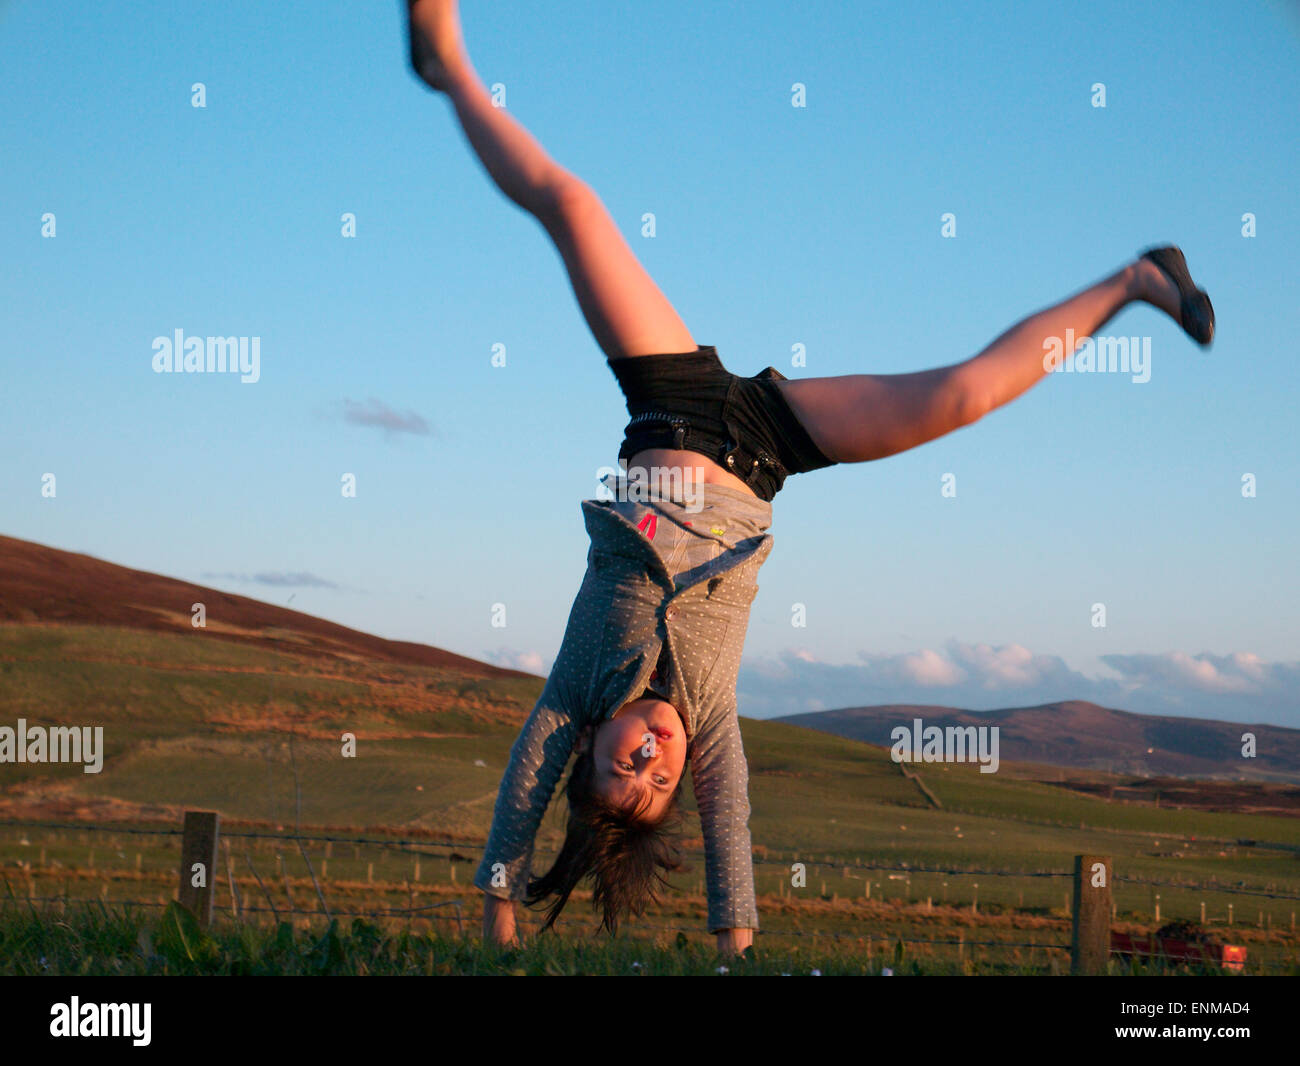 Girl performing a cartwheel Stock Photo